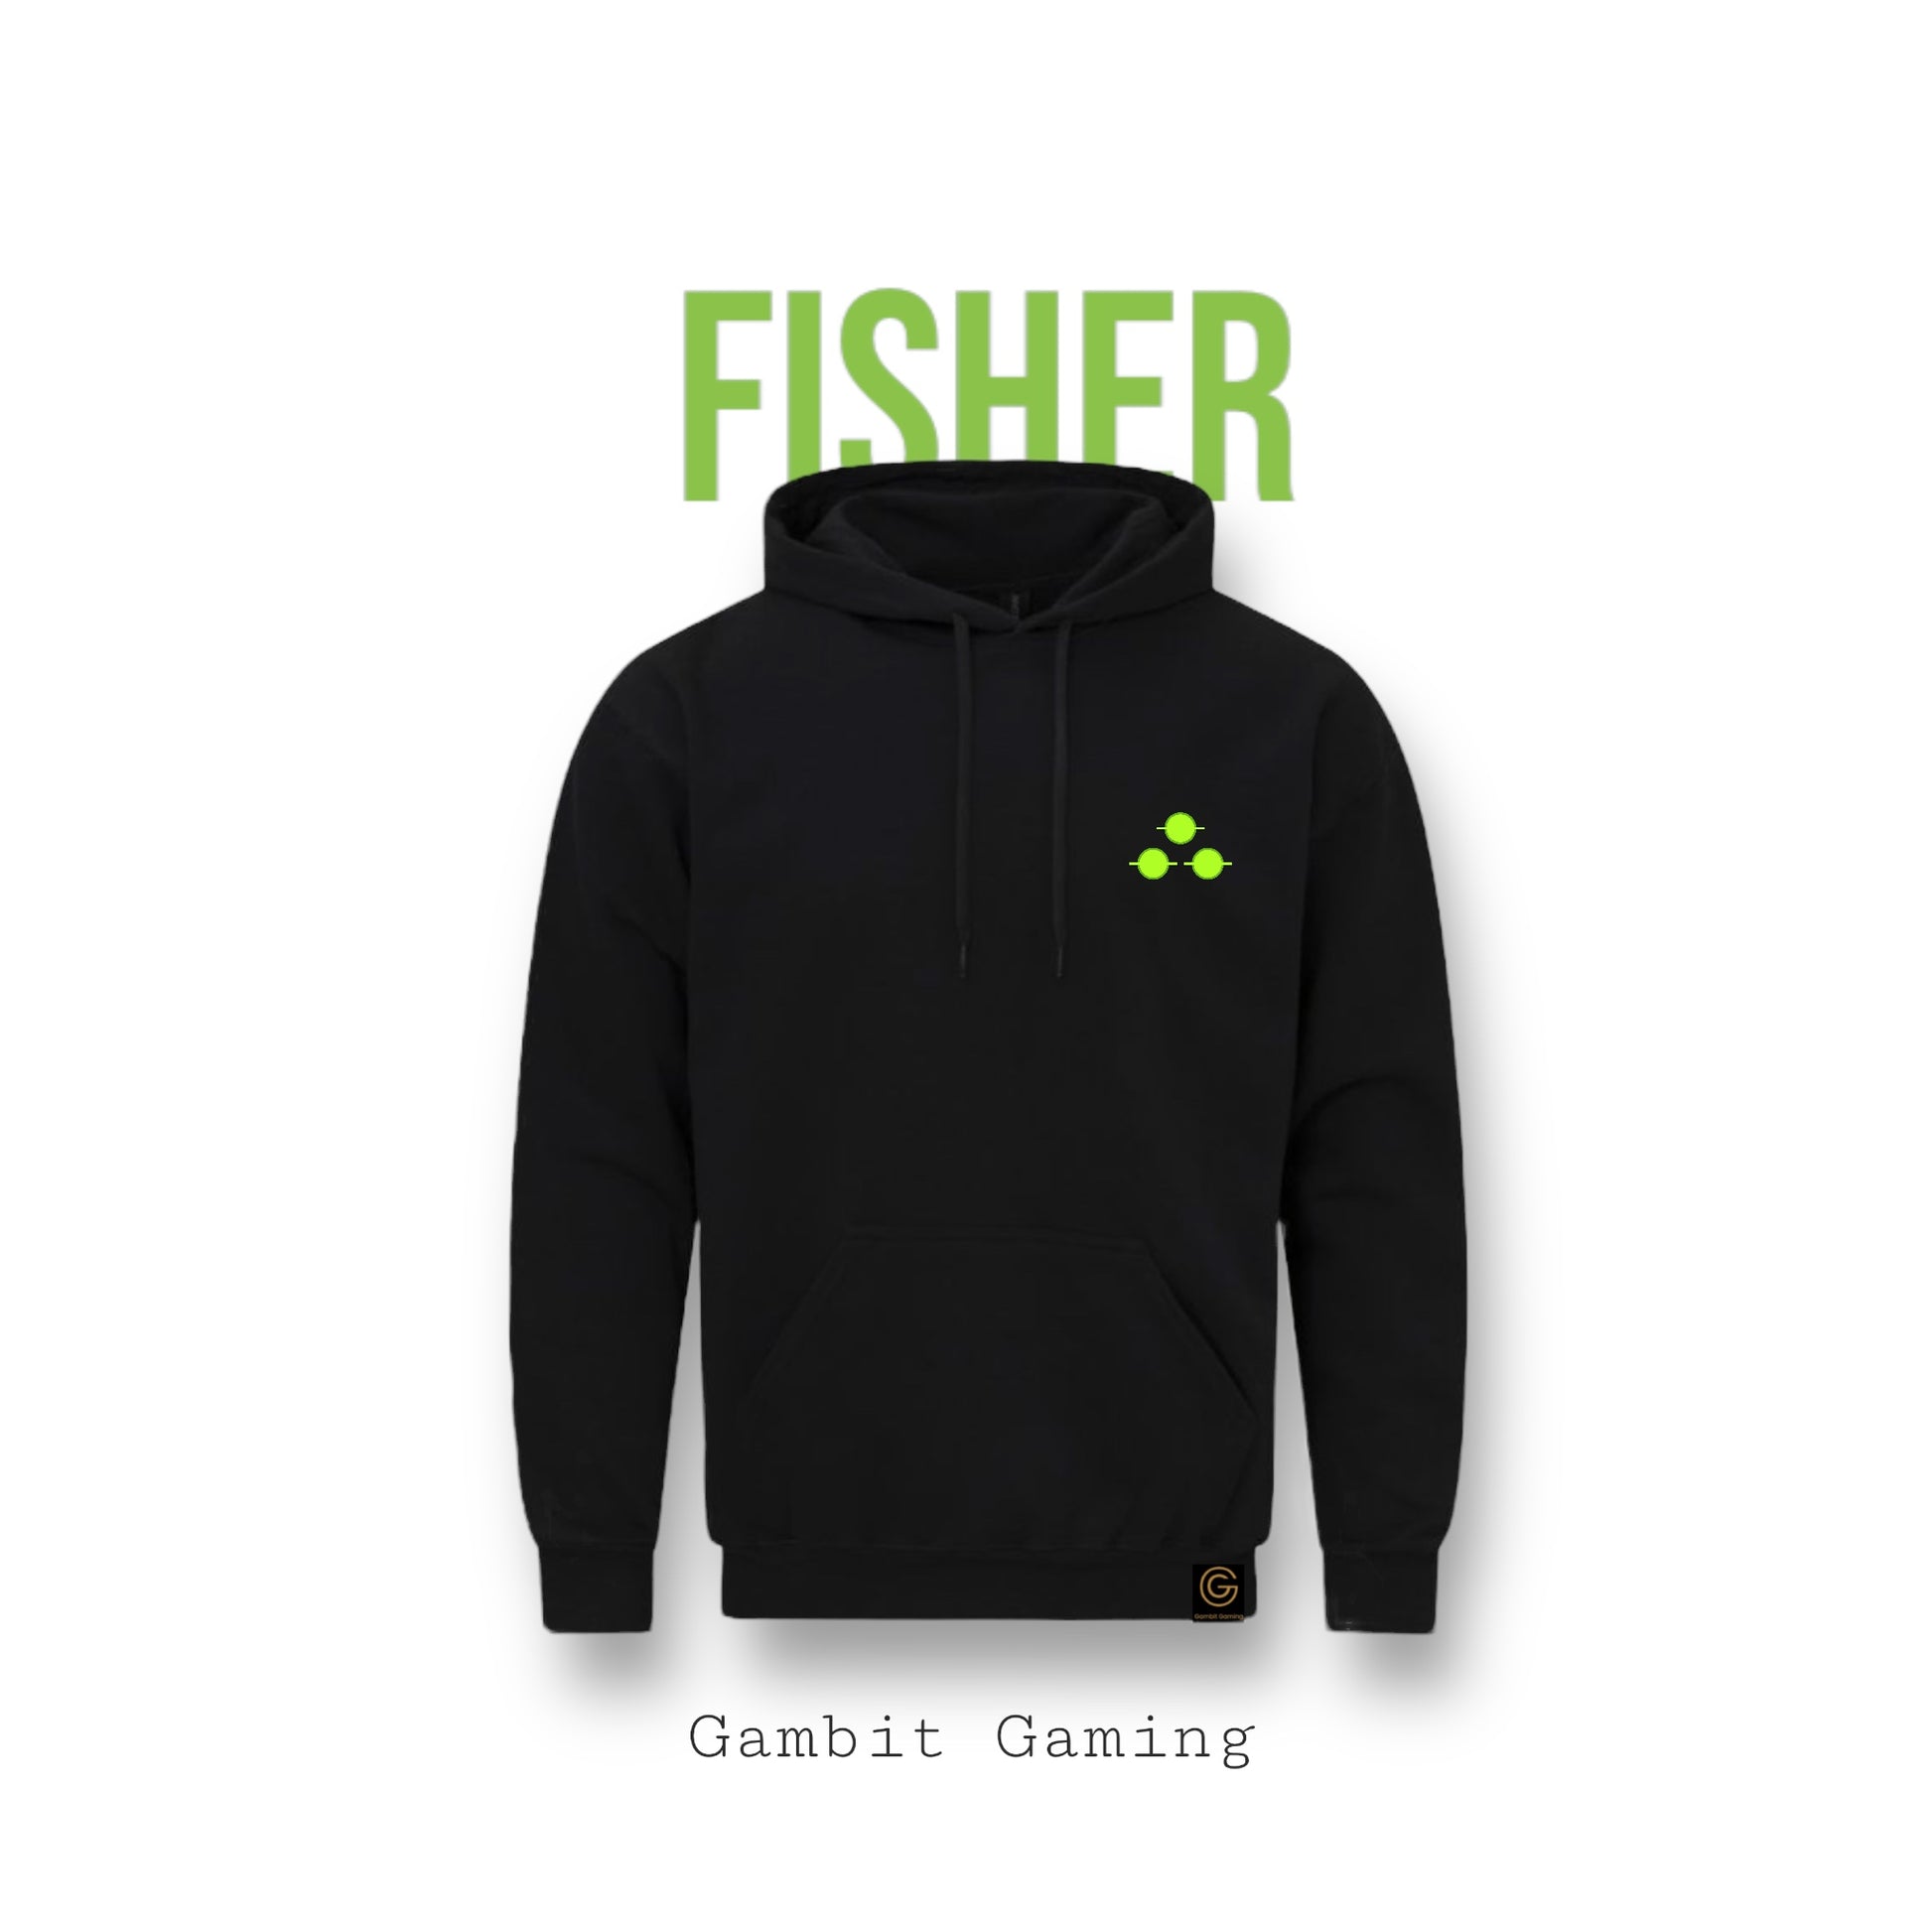 Fisher Hoodie - Gambit Gaming